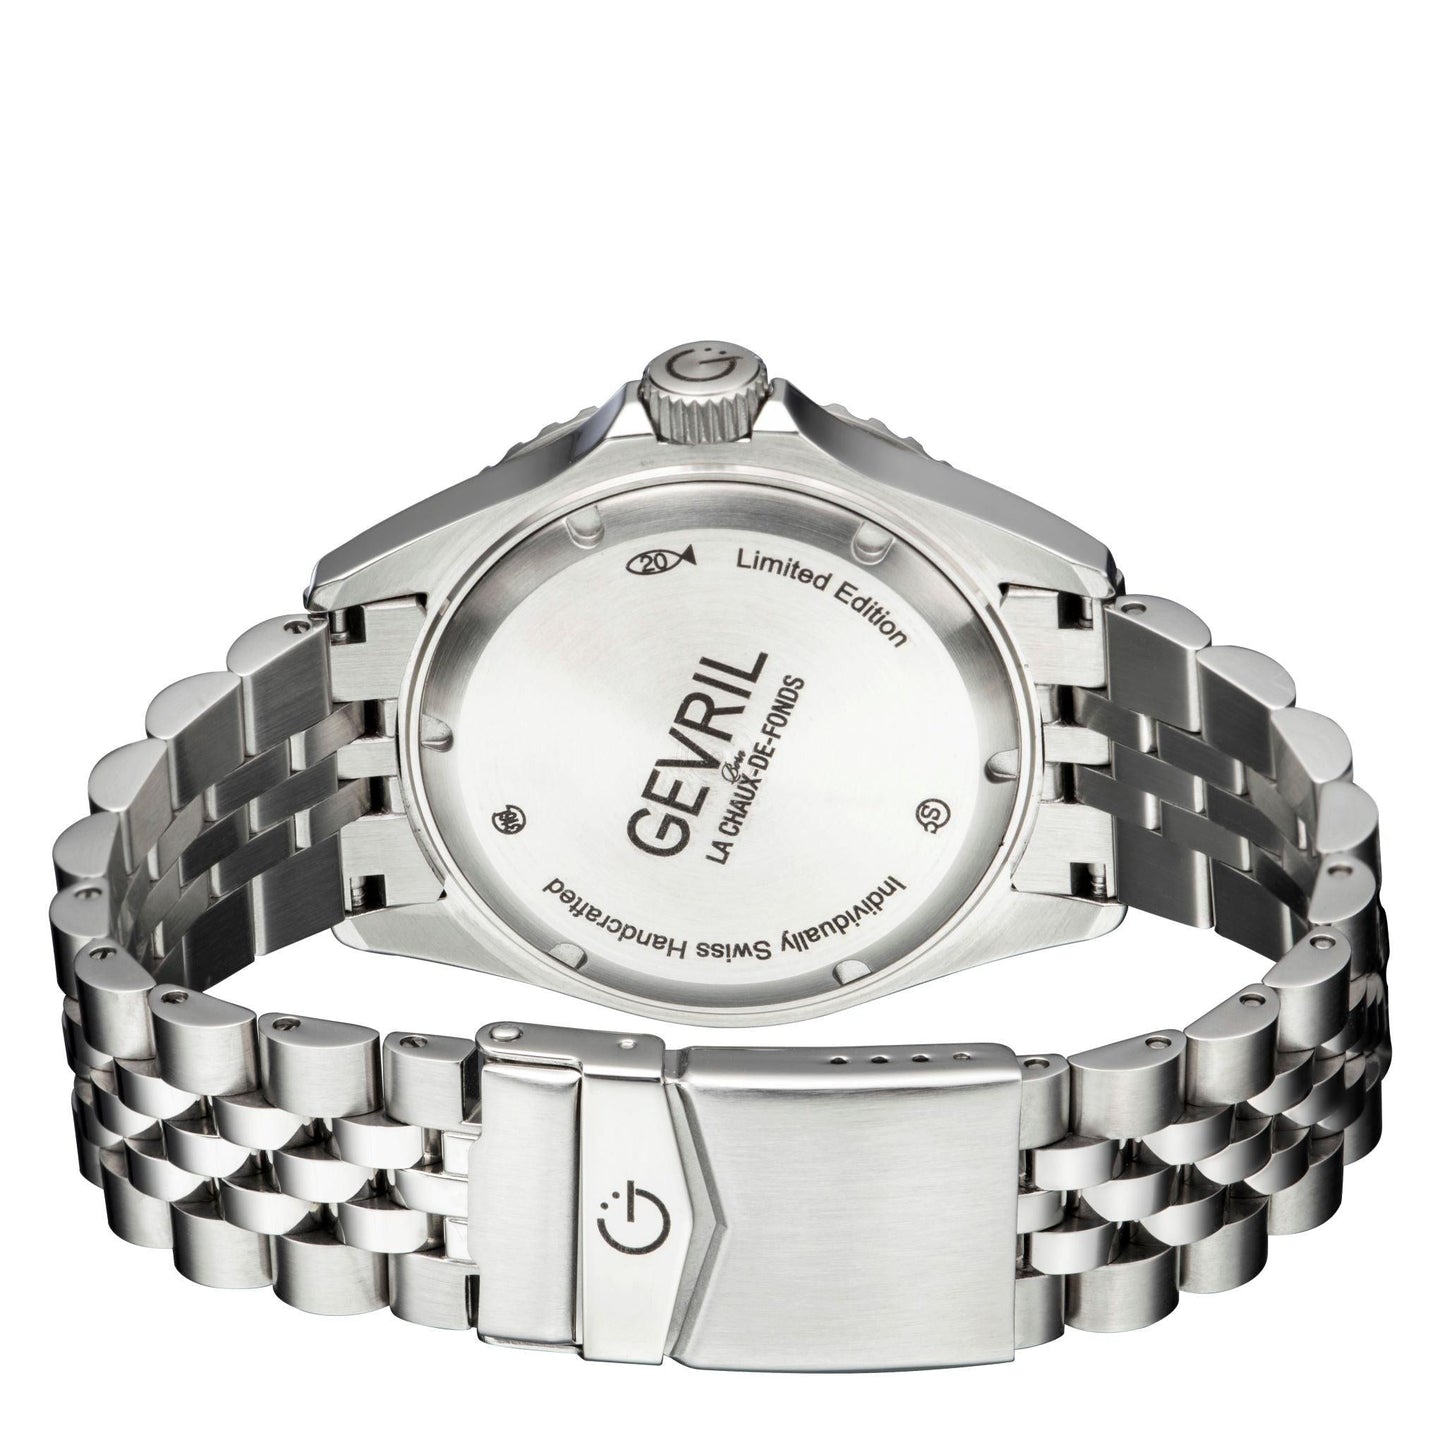 Gevril-Luxury-Swiss-Watches-Gevril Wall Street - Ceramic Bezel-4954B